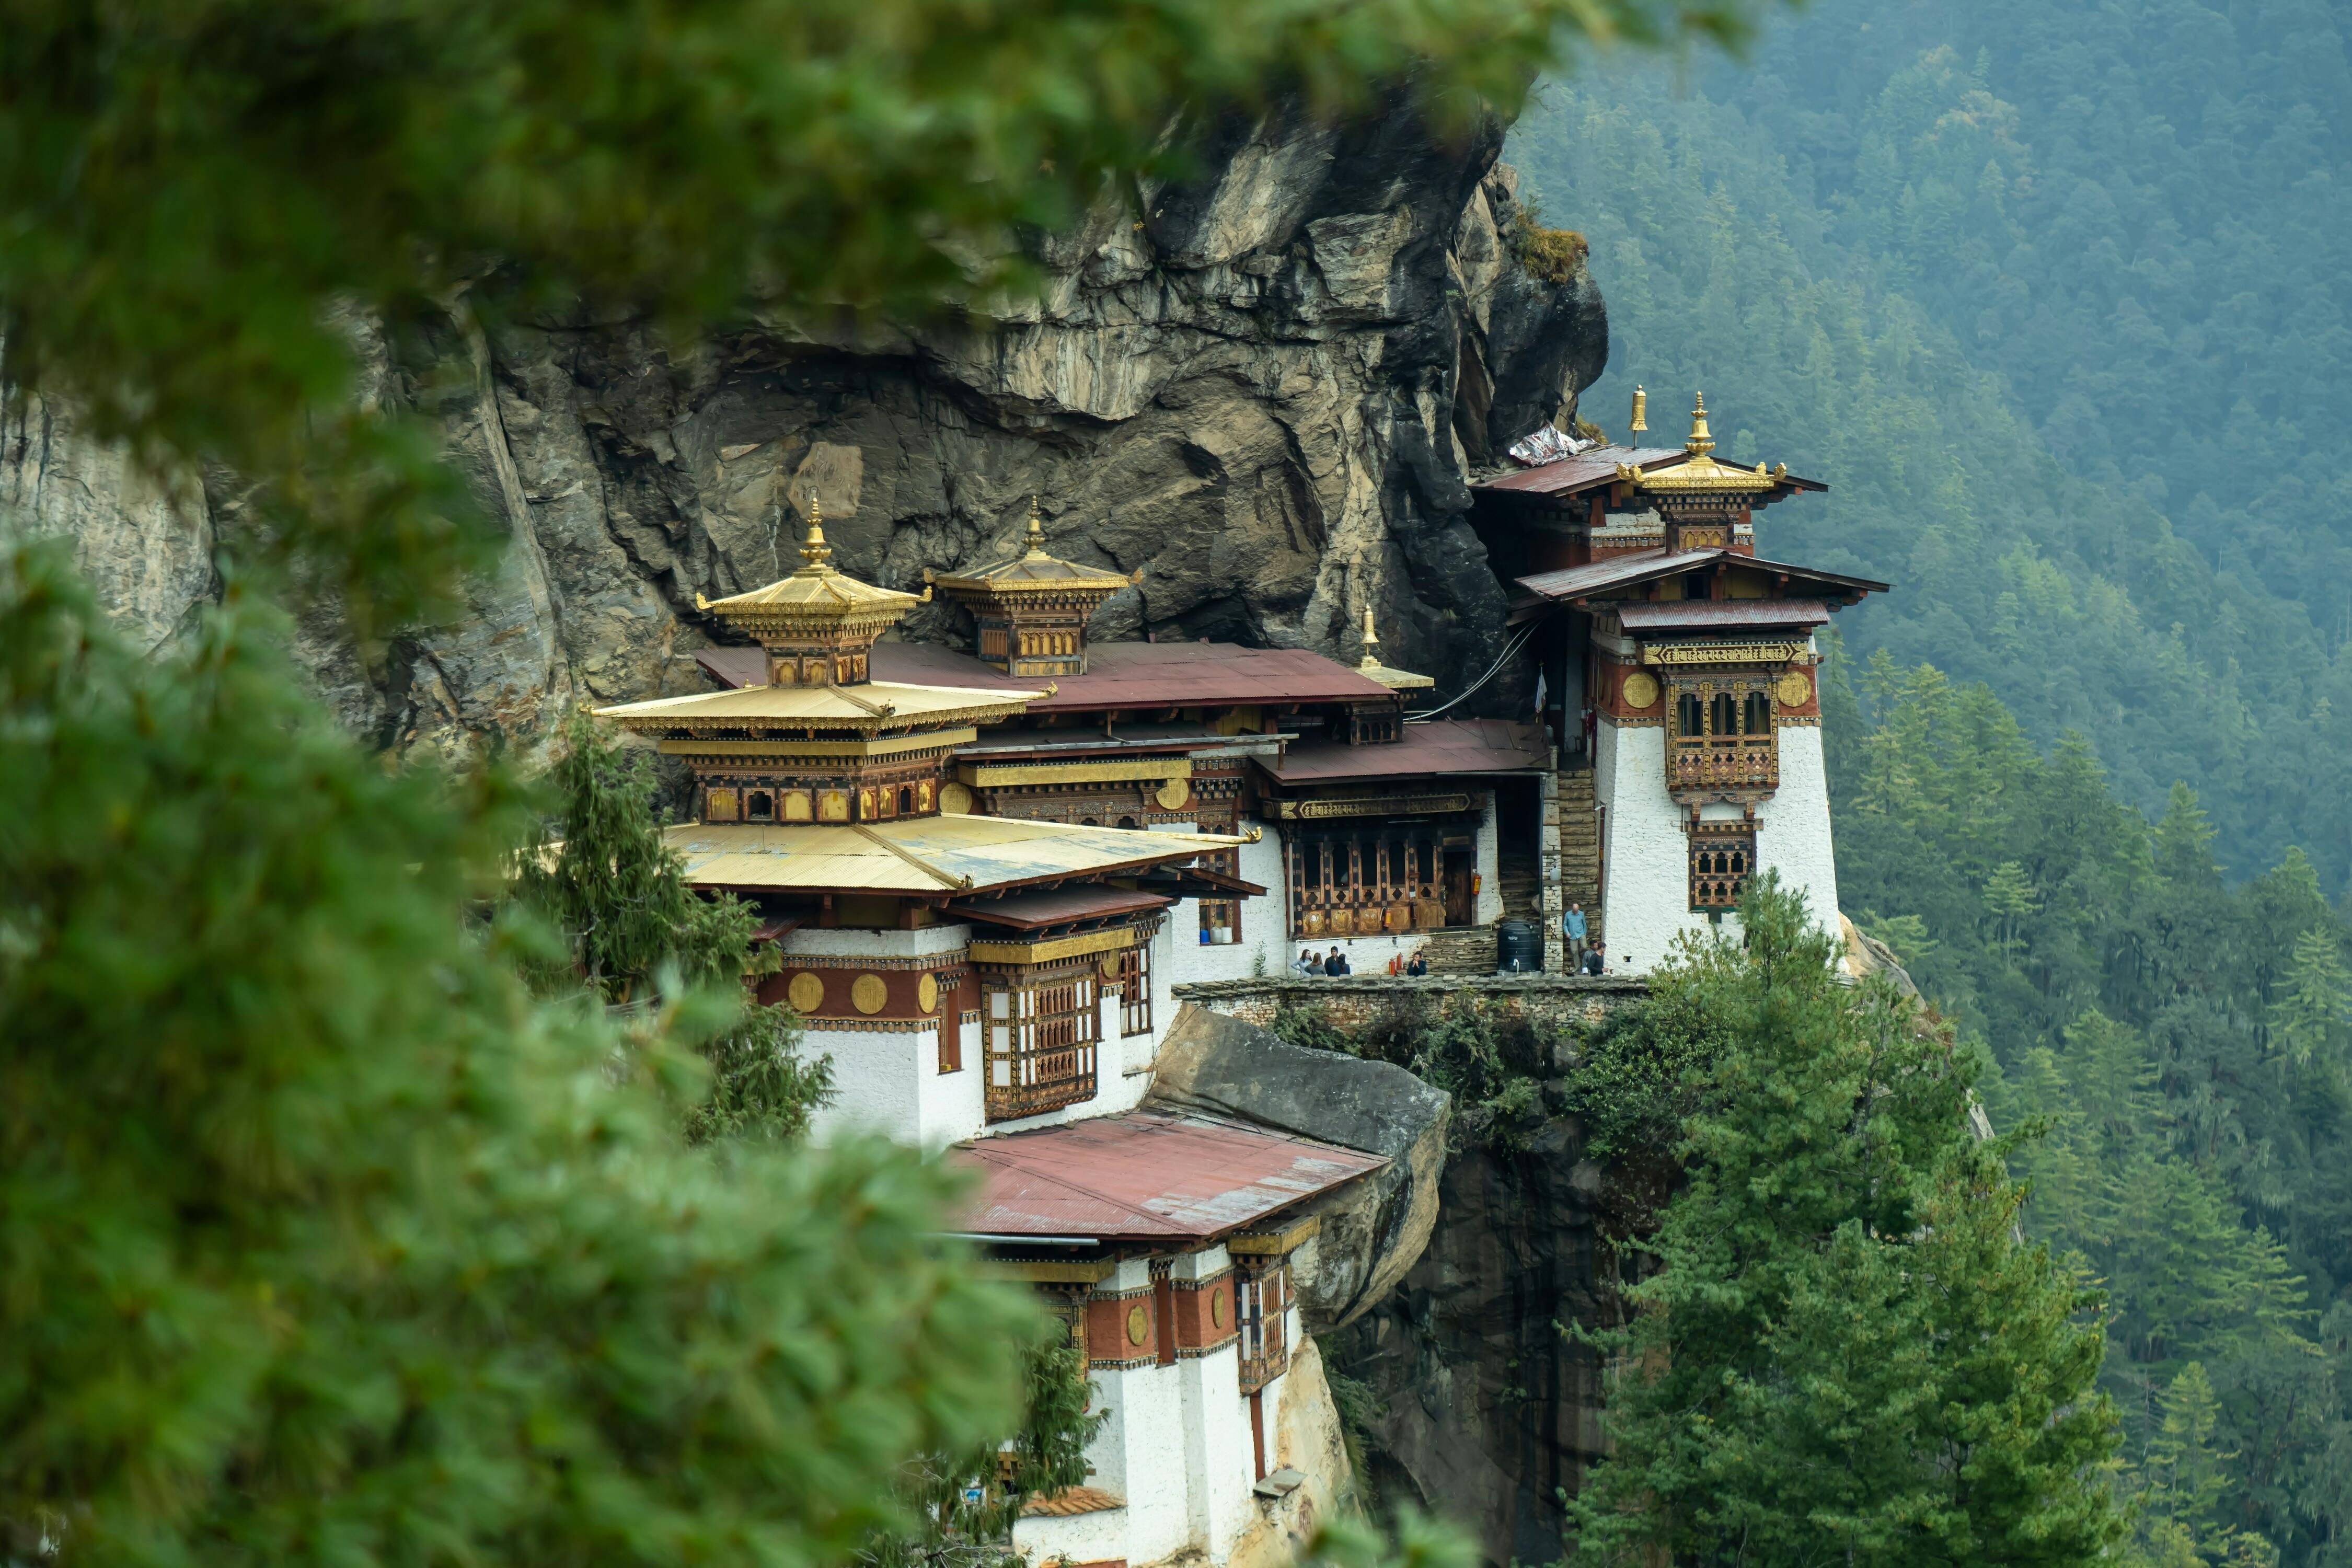 Photograph of Tiger Nest Bhutan Monastery